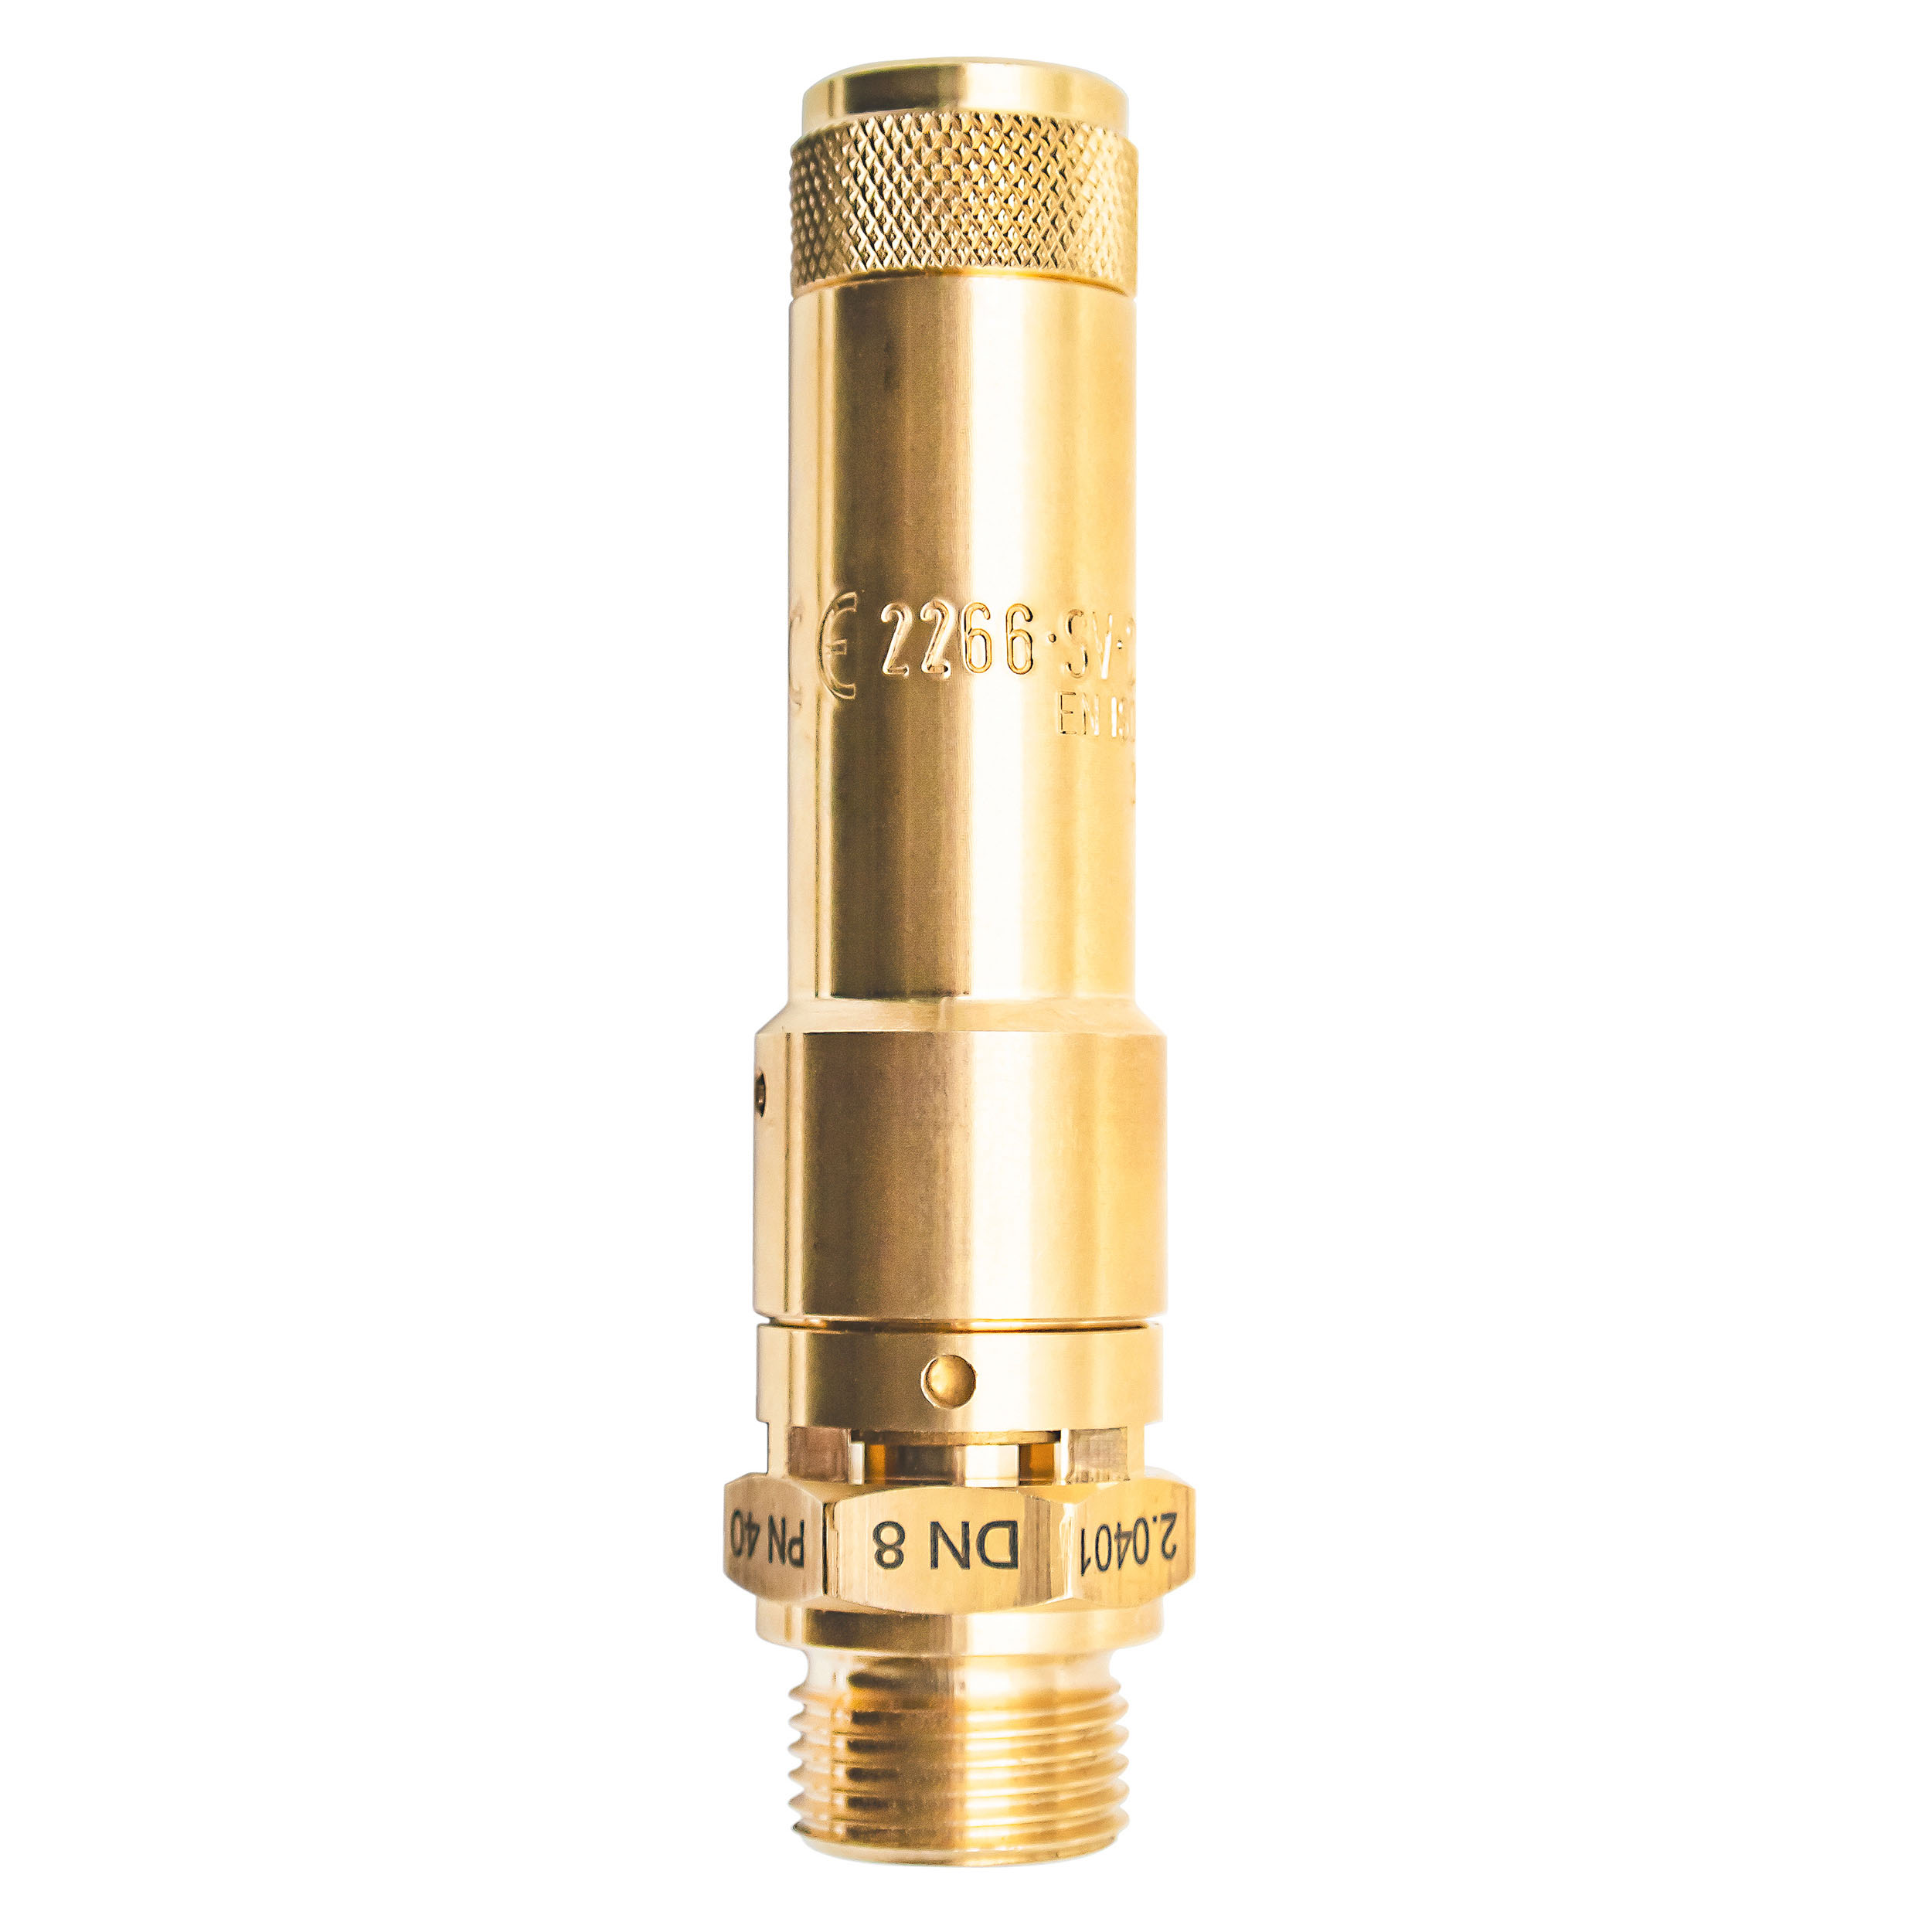 Savety valve component tested DN 8, G¼, set pressure: 1.2 bar (17,4 psi)